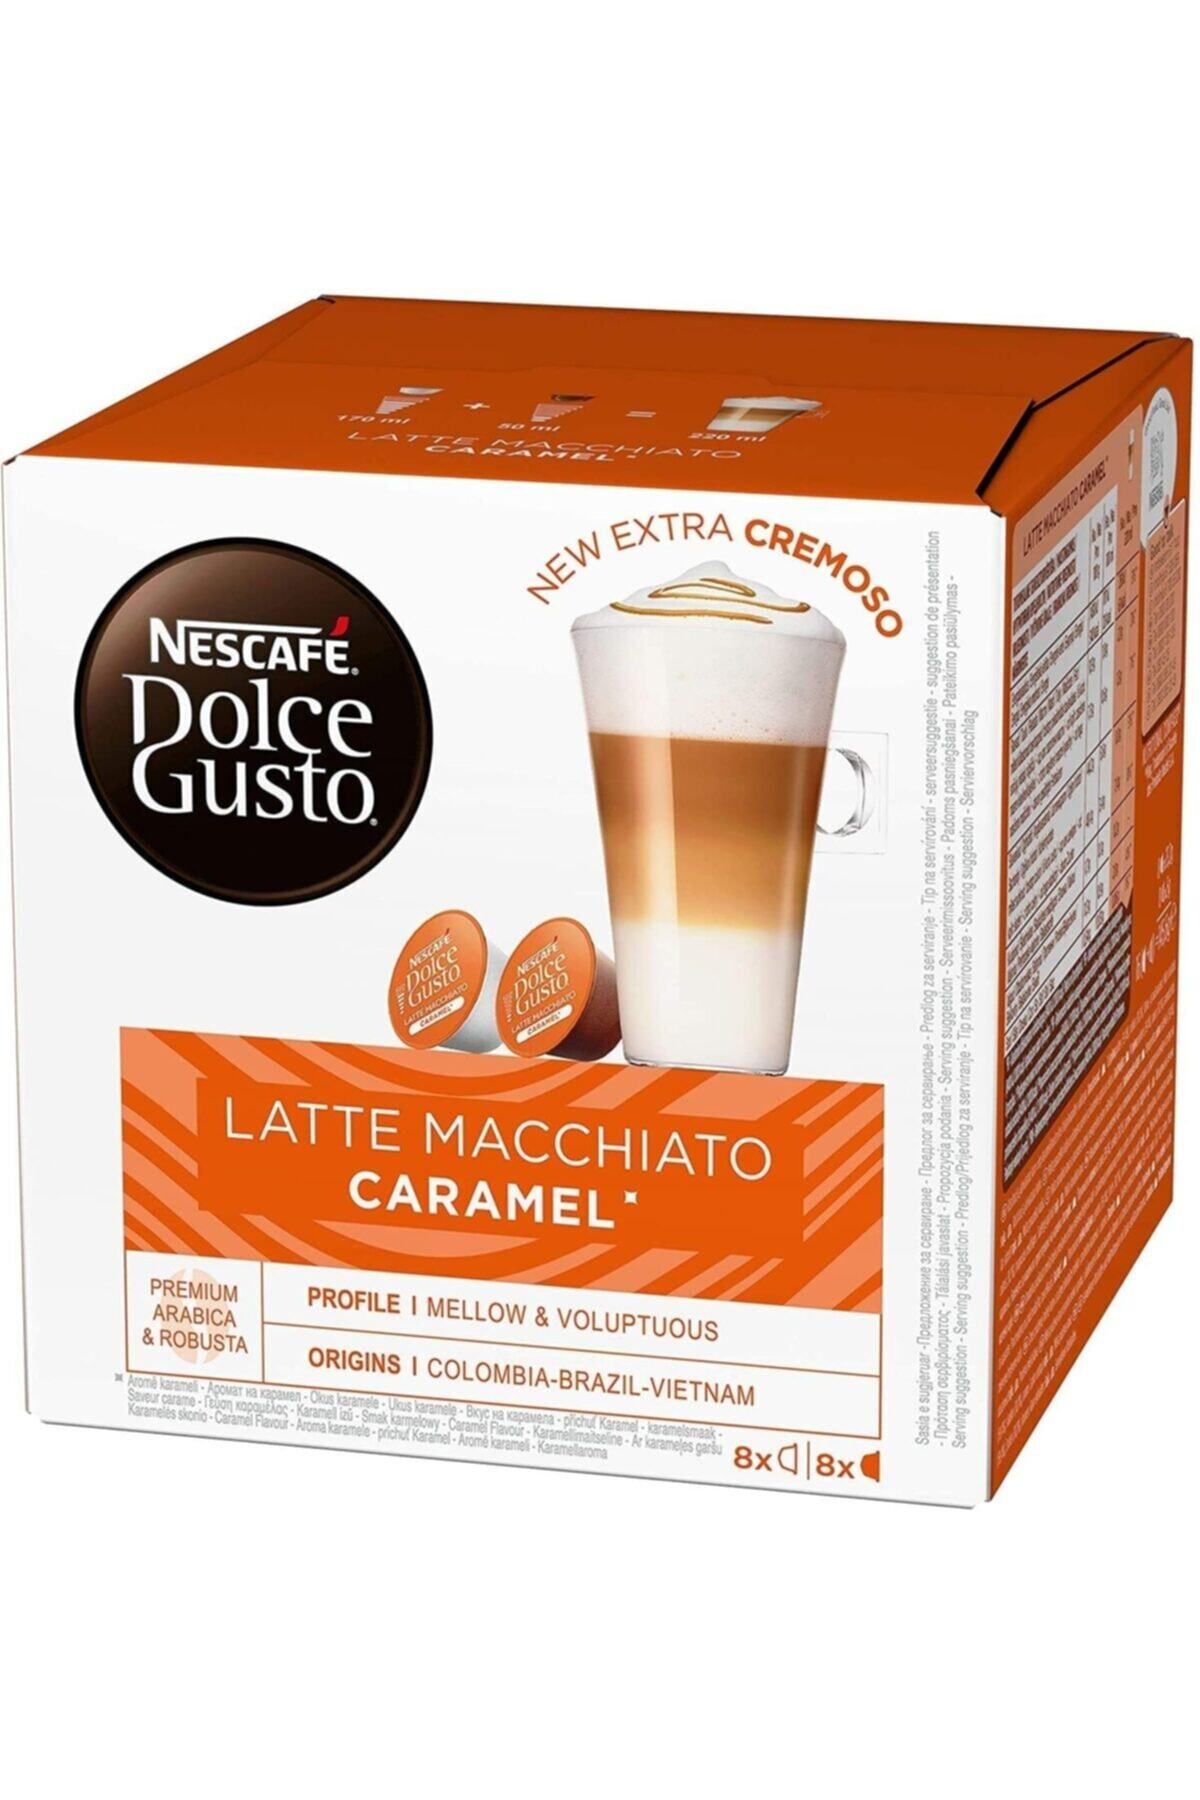 Nescafe Dolce Gusto Latte Macchıato Caramel New Extra Cremoso Dolcelatte